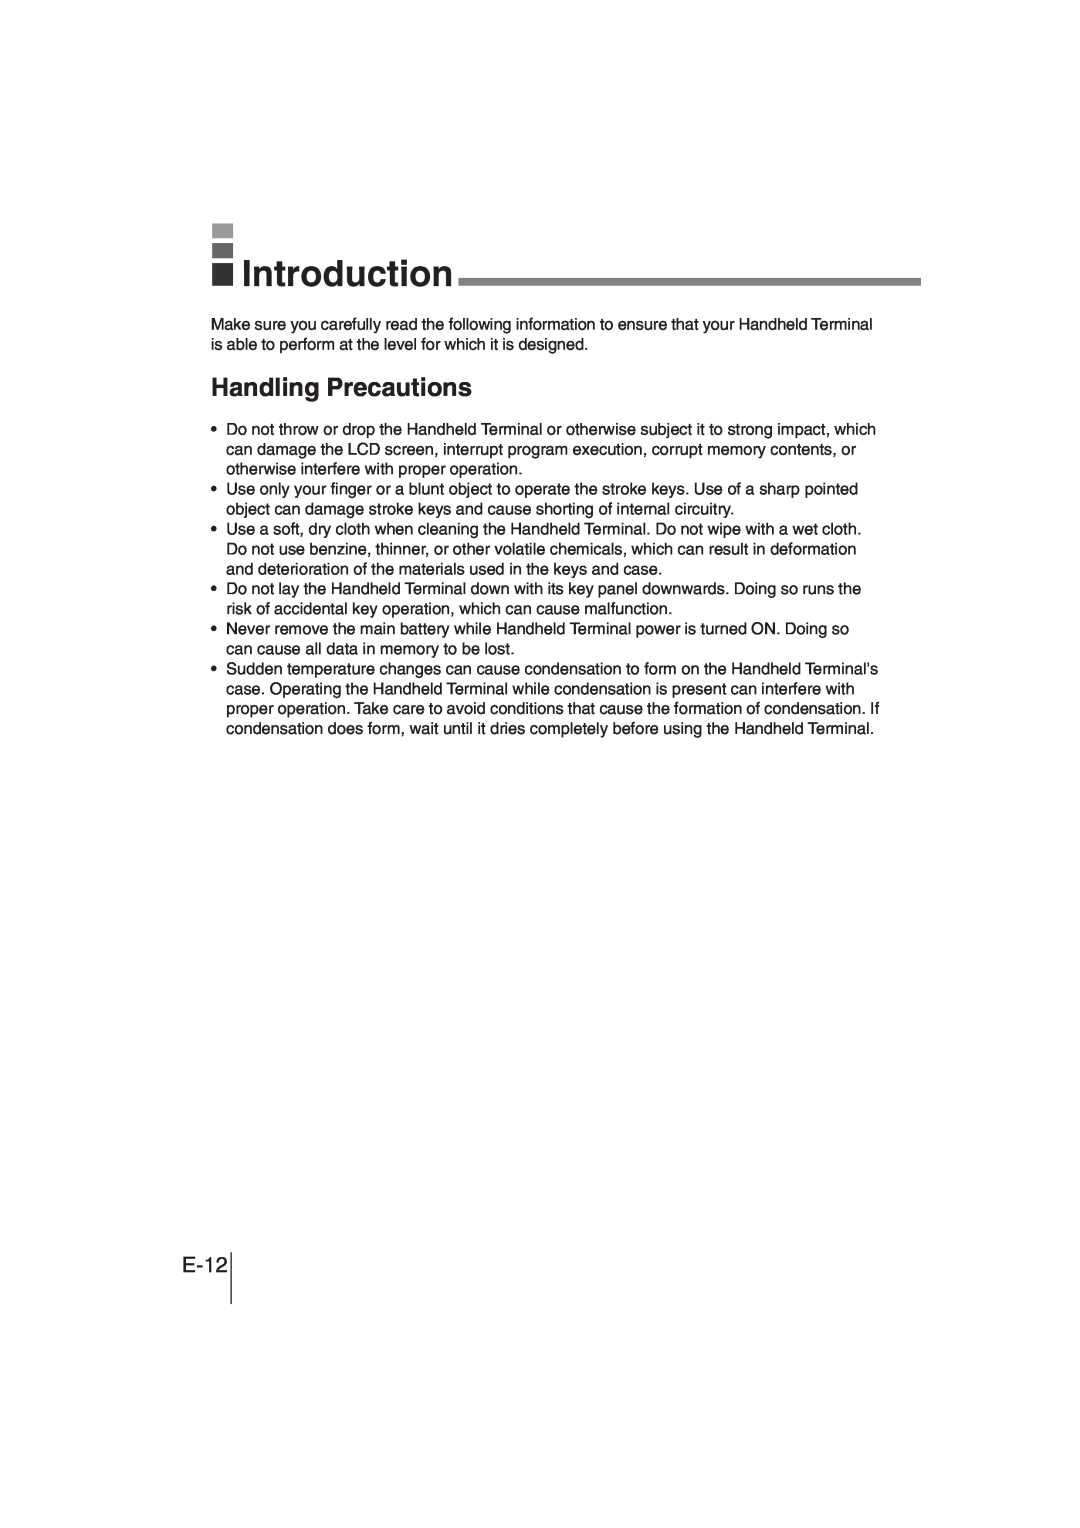 Casio DT-930 manual Introduction, Handling Precautions, E-12 